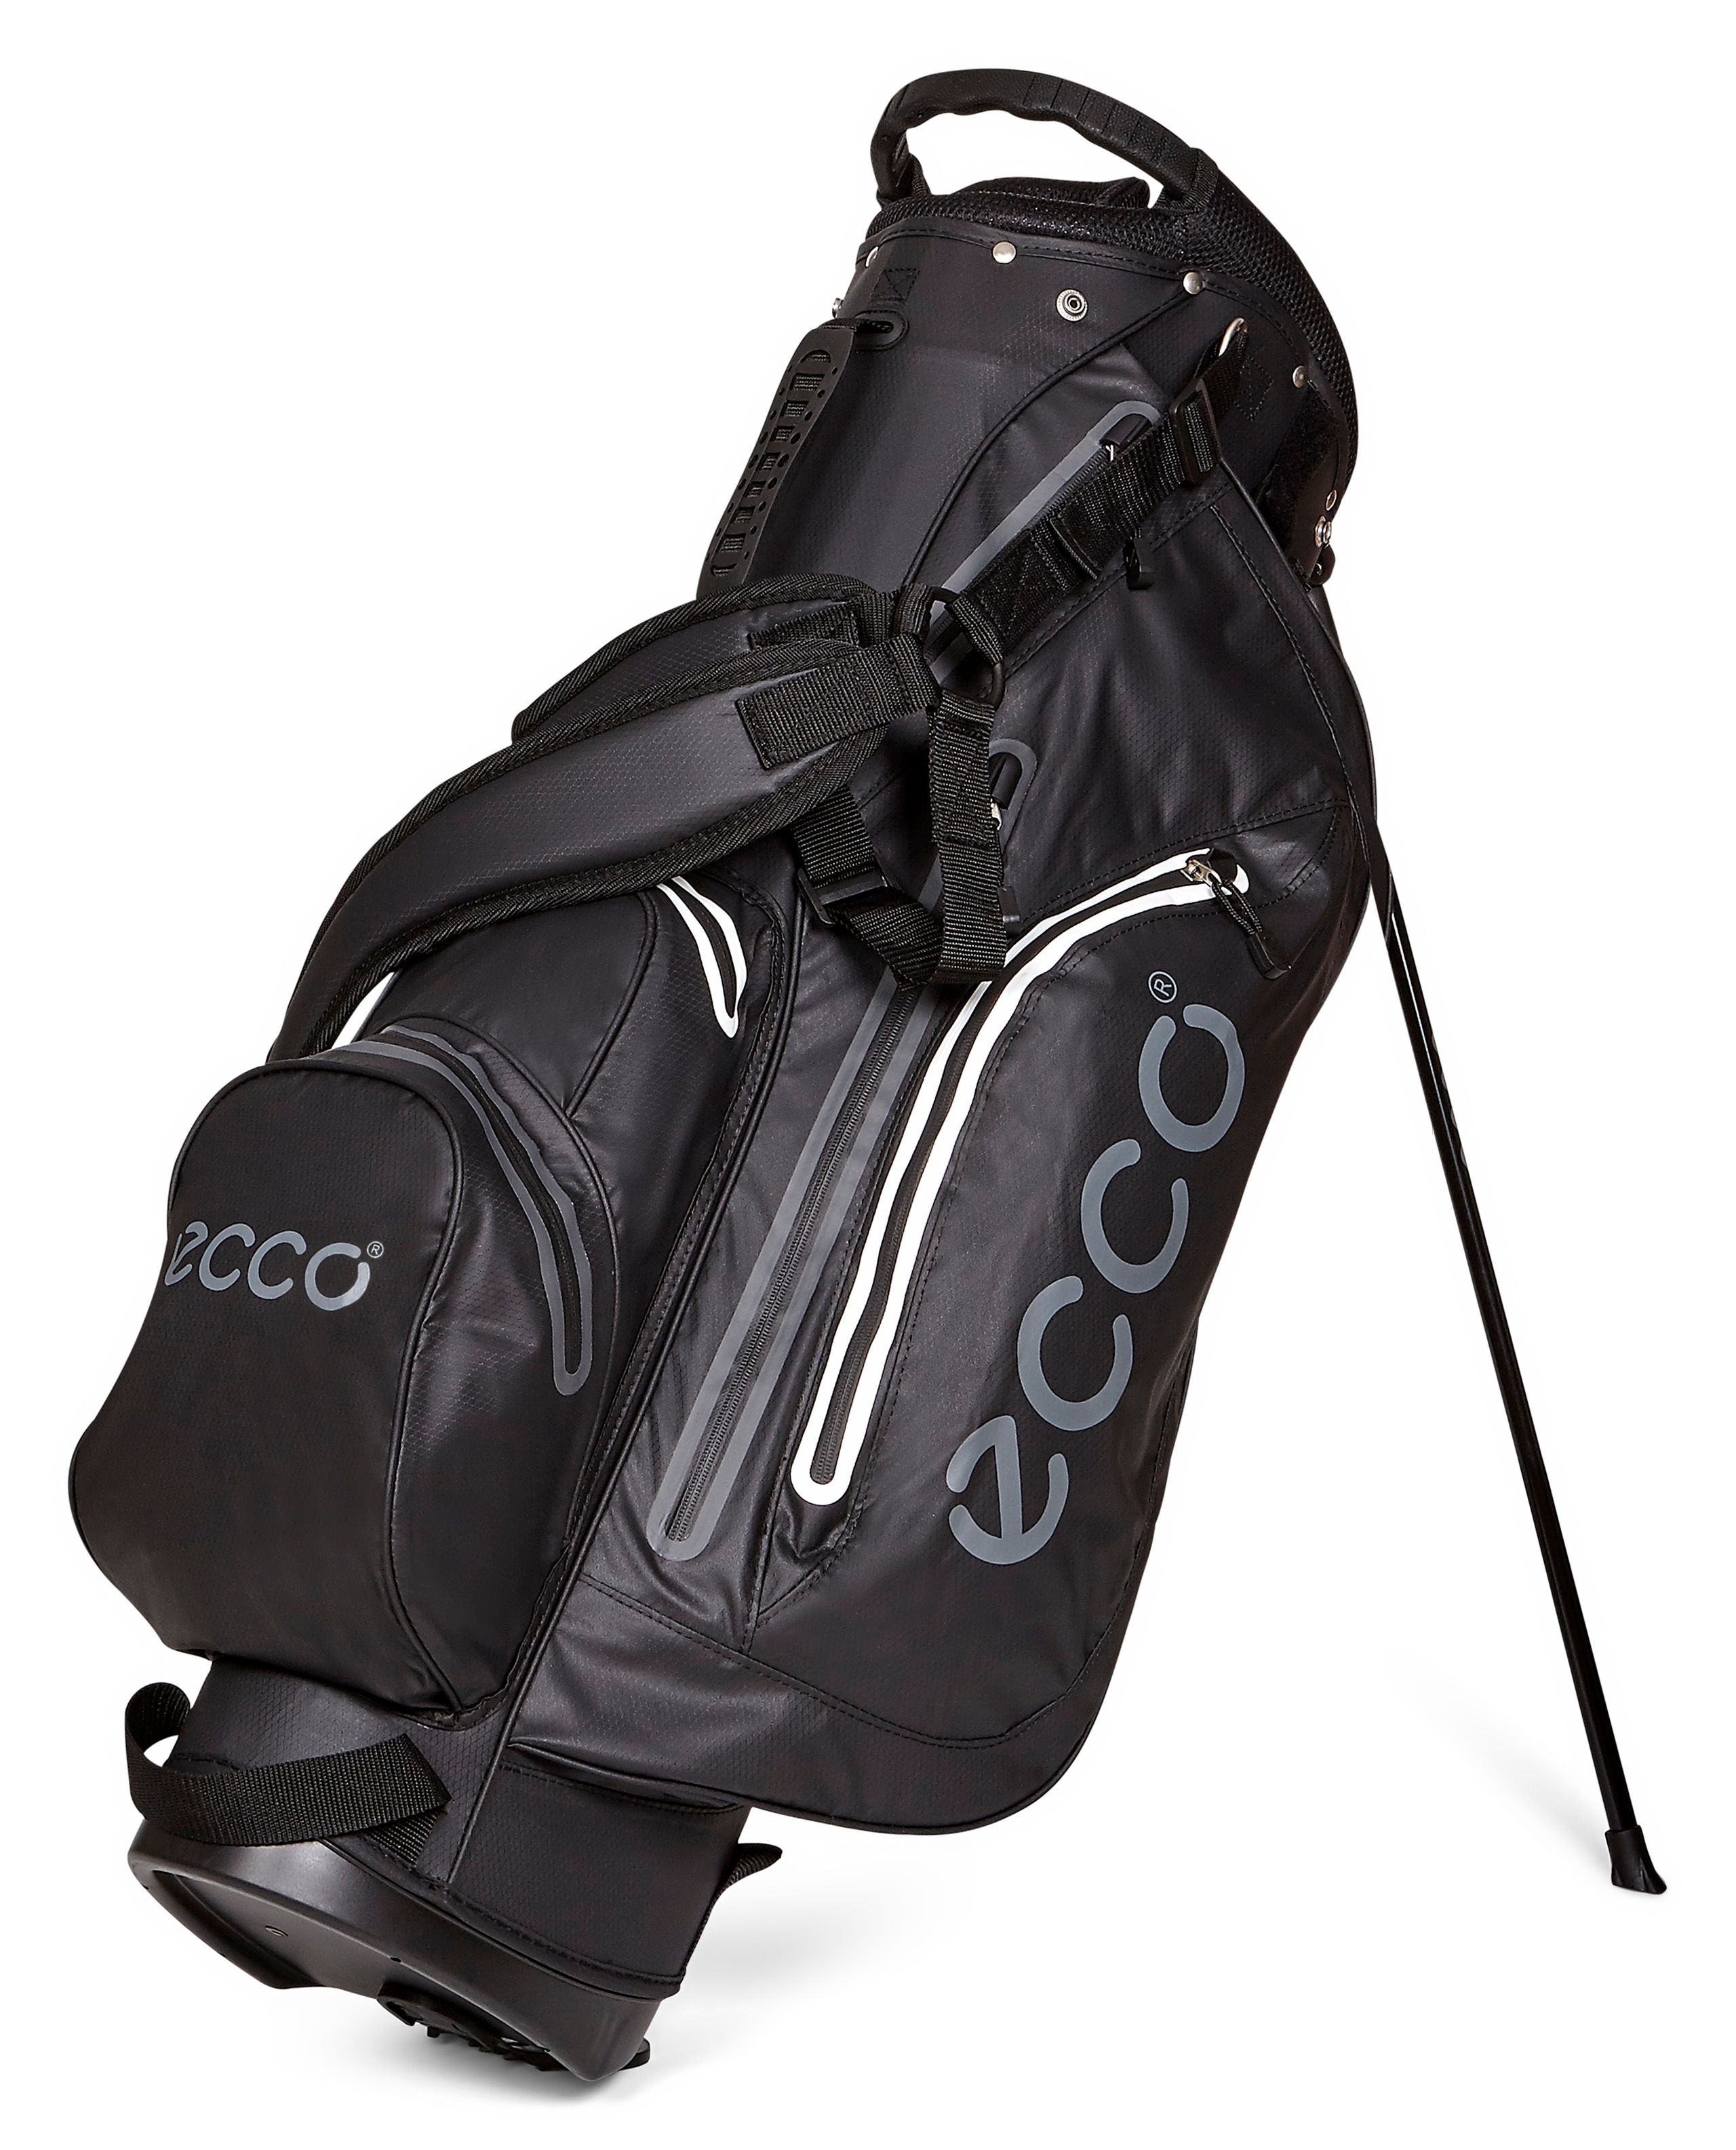 ecco golf bag review